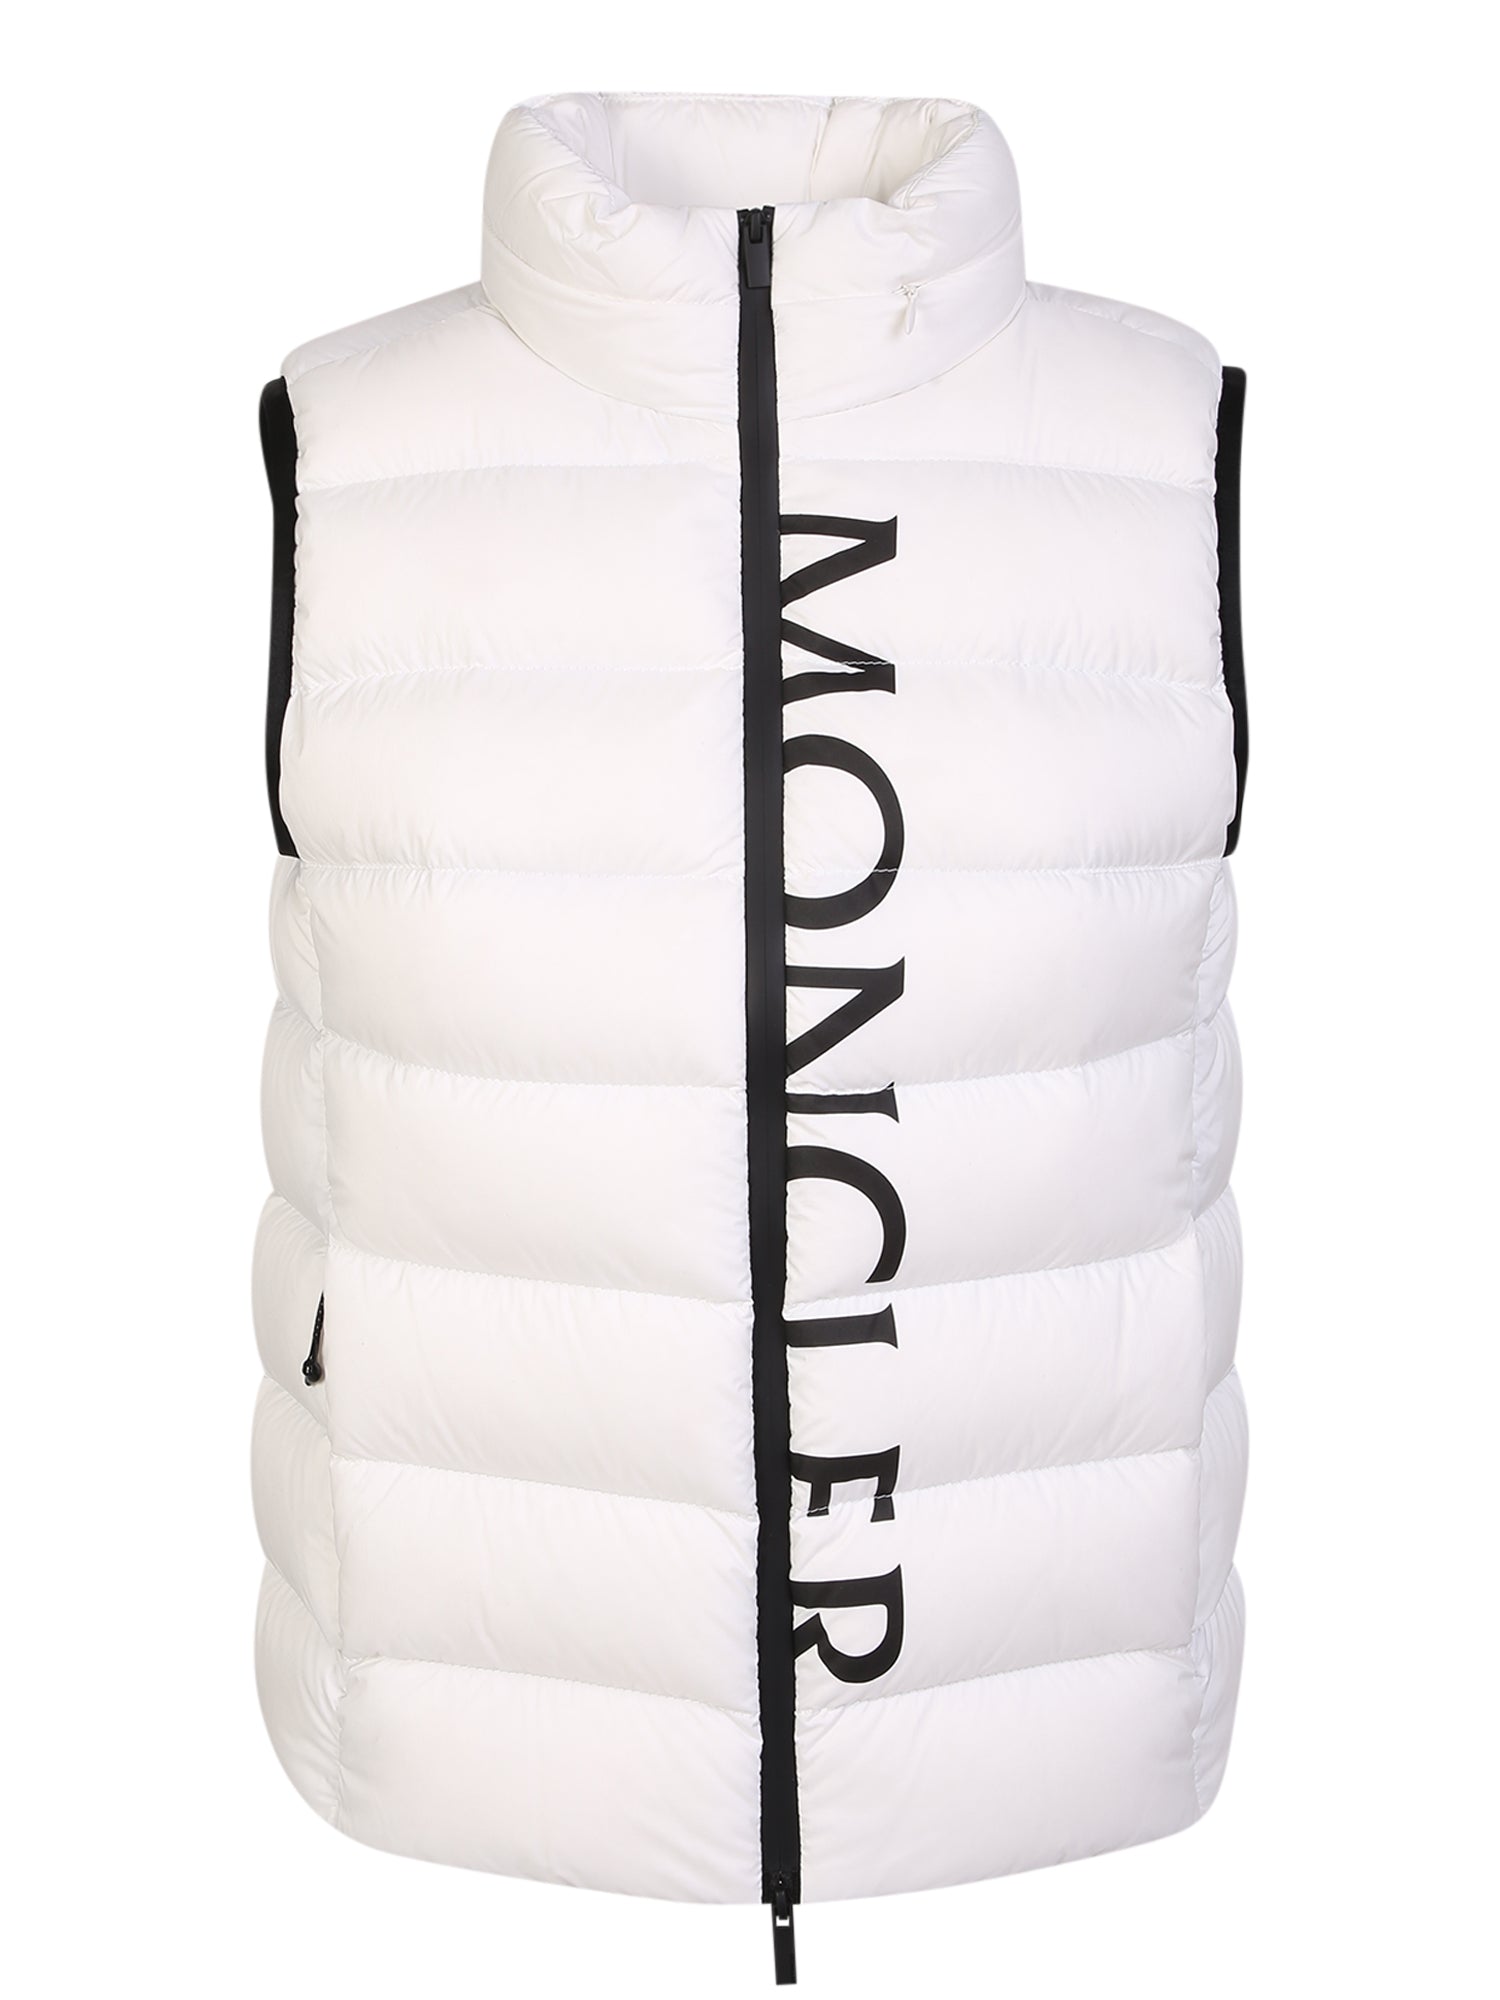 Cenis padded vest embellished with the Moncler logo print – DELL'OGLIO